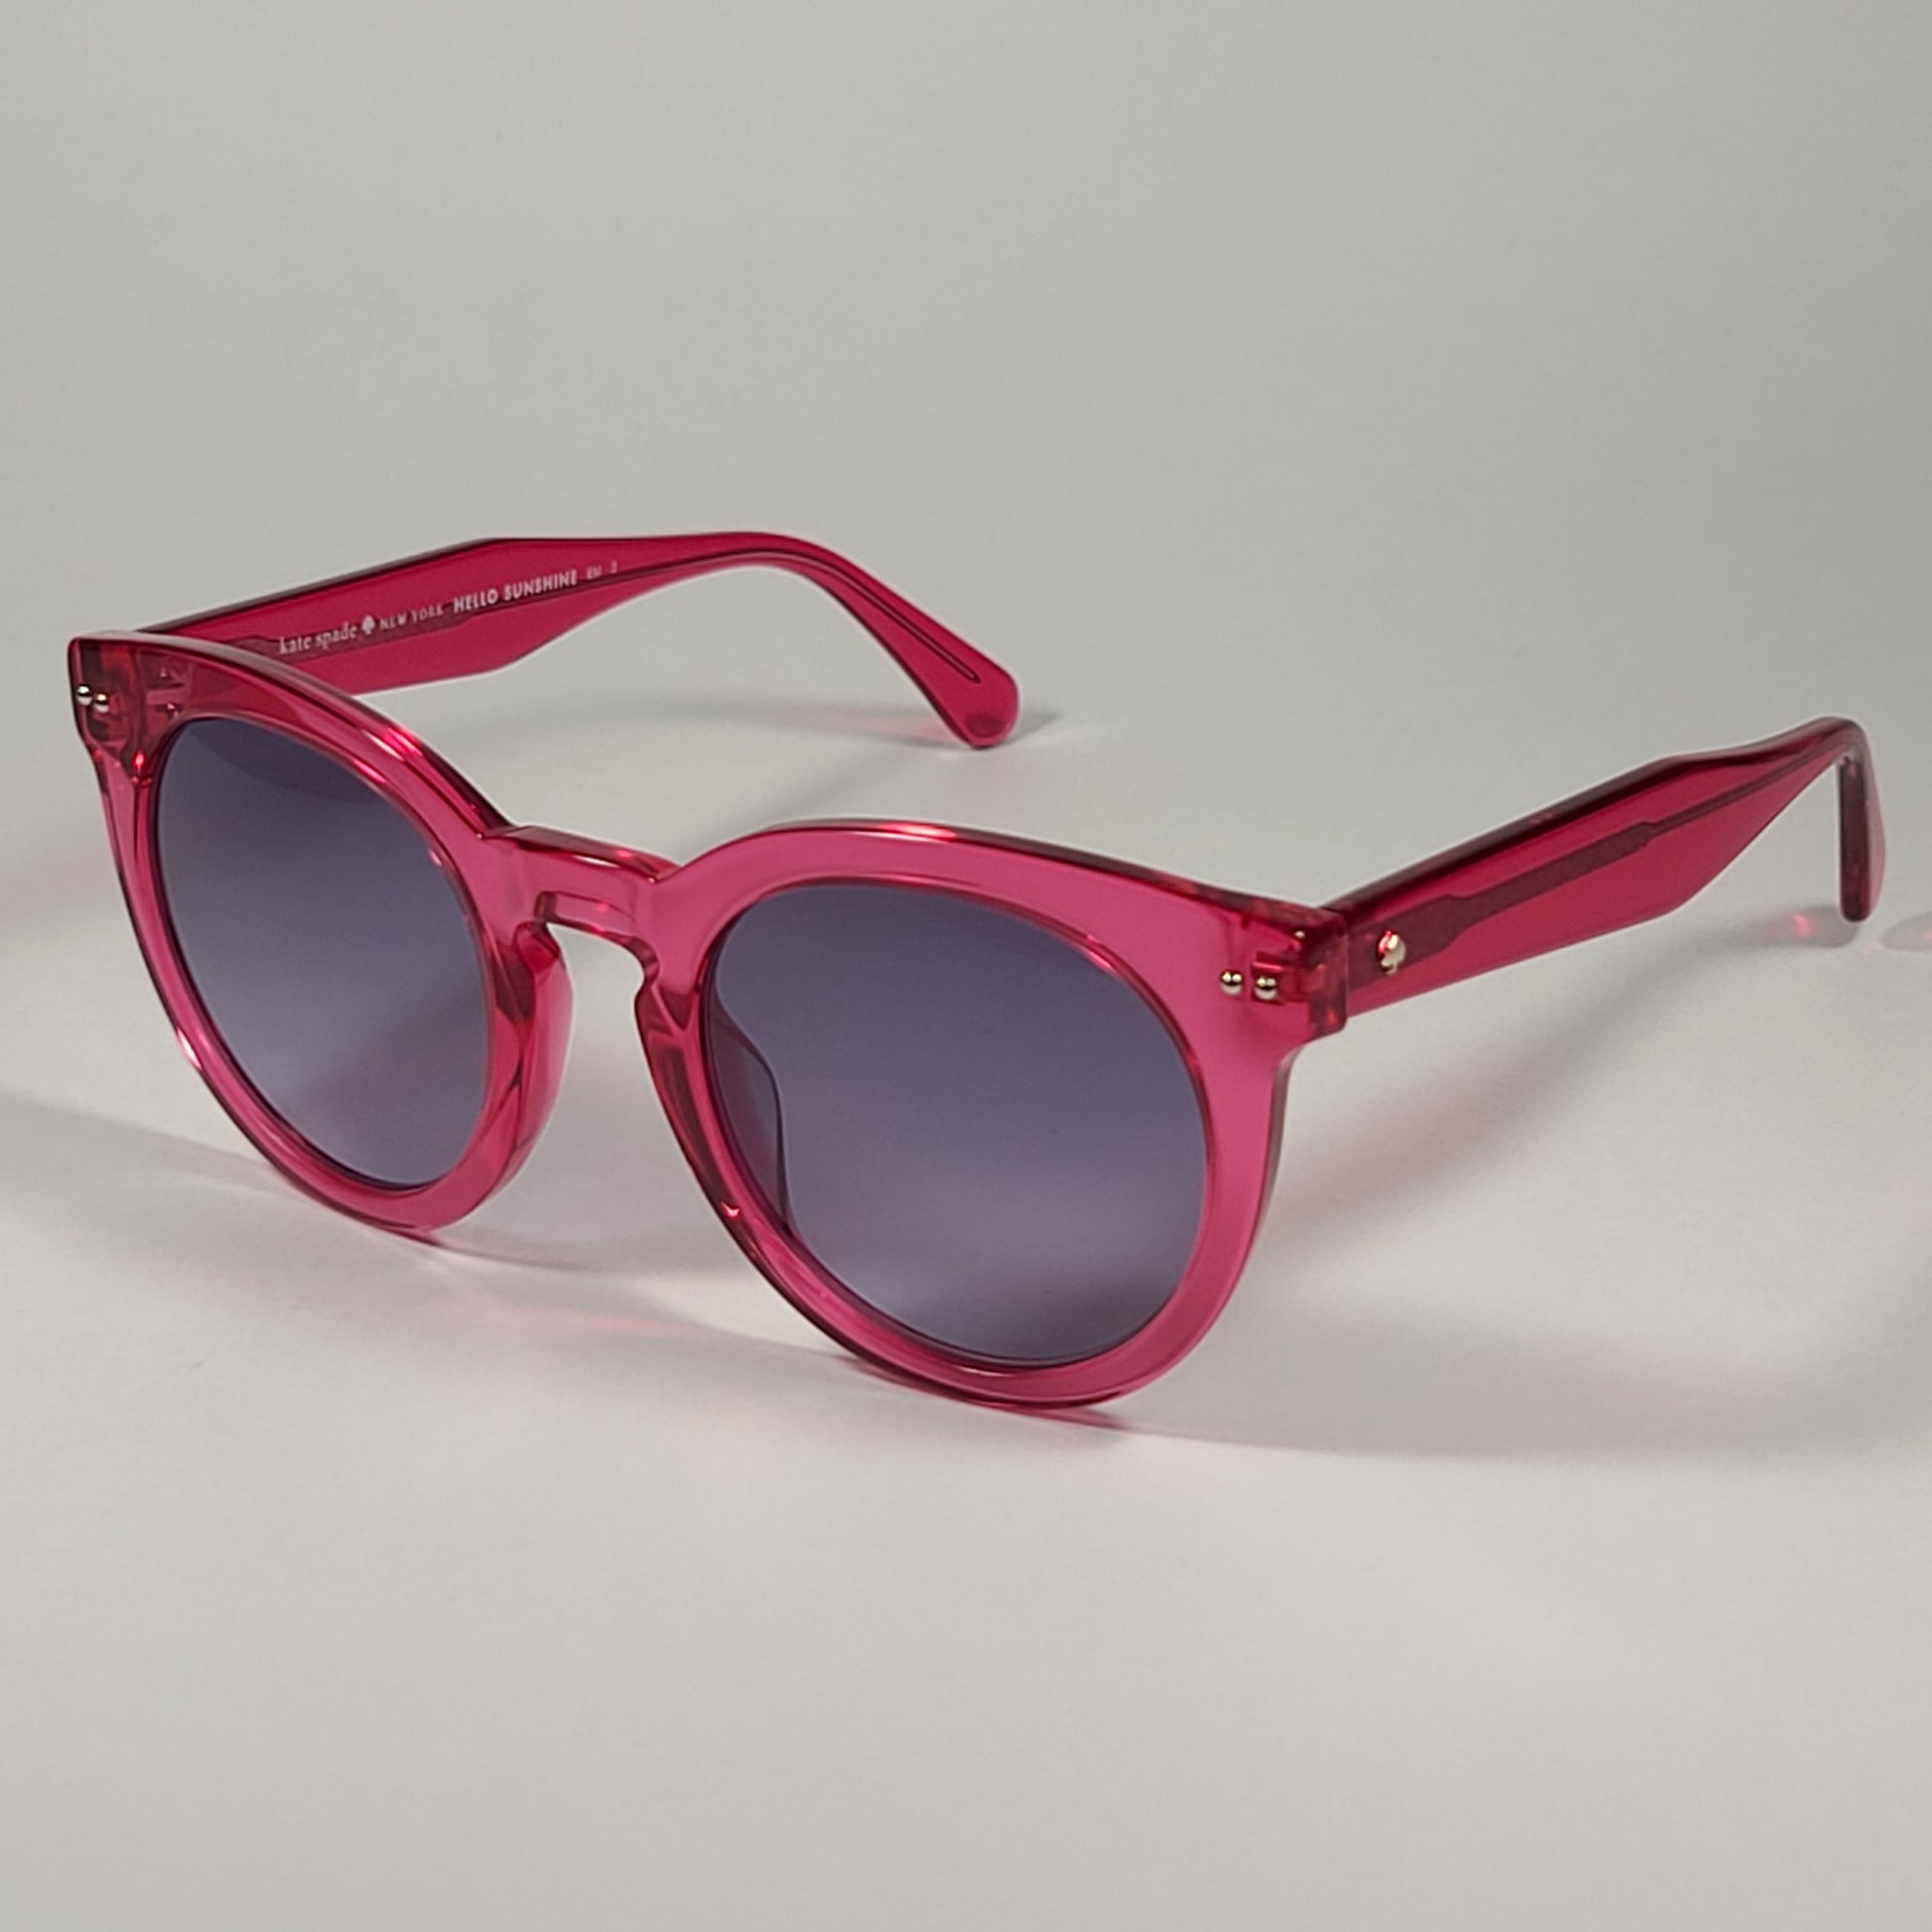 Kate Spade Alexus/S 3DVGB Round Sunglasses Pink Crystal Frame Gray Gradient Lens - Sunglasses